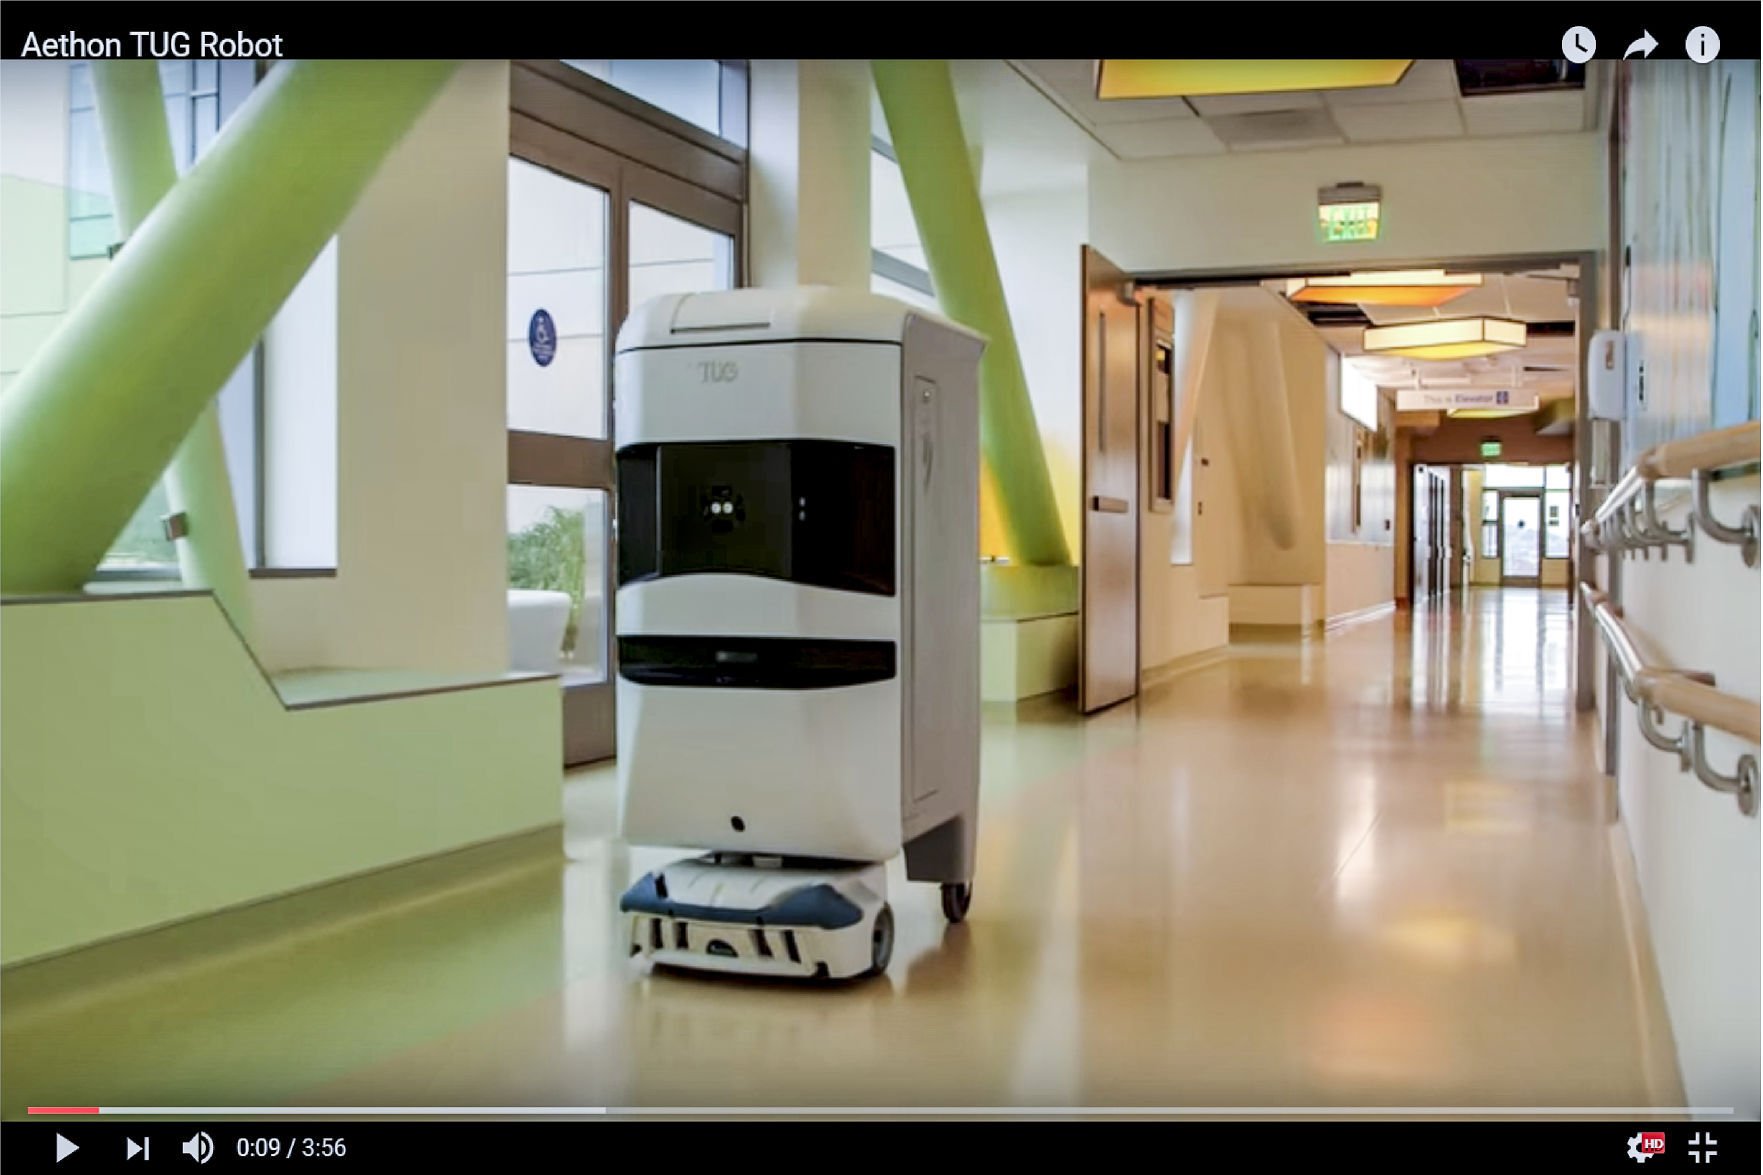 hospital robot atempts to escape hospital